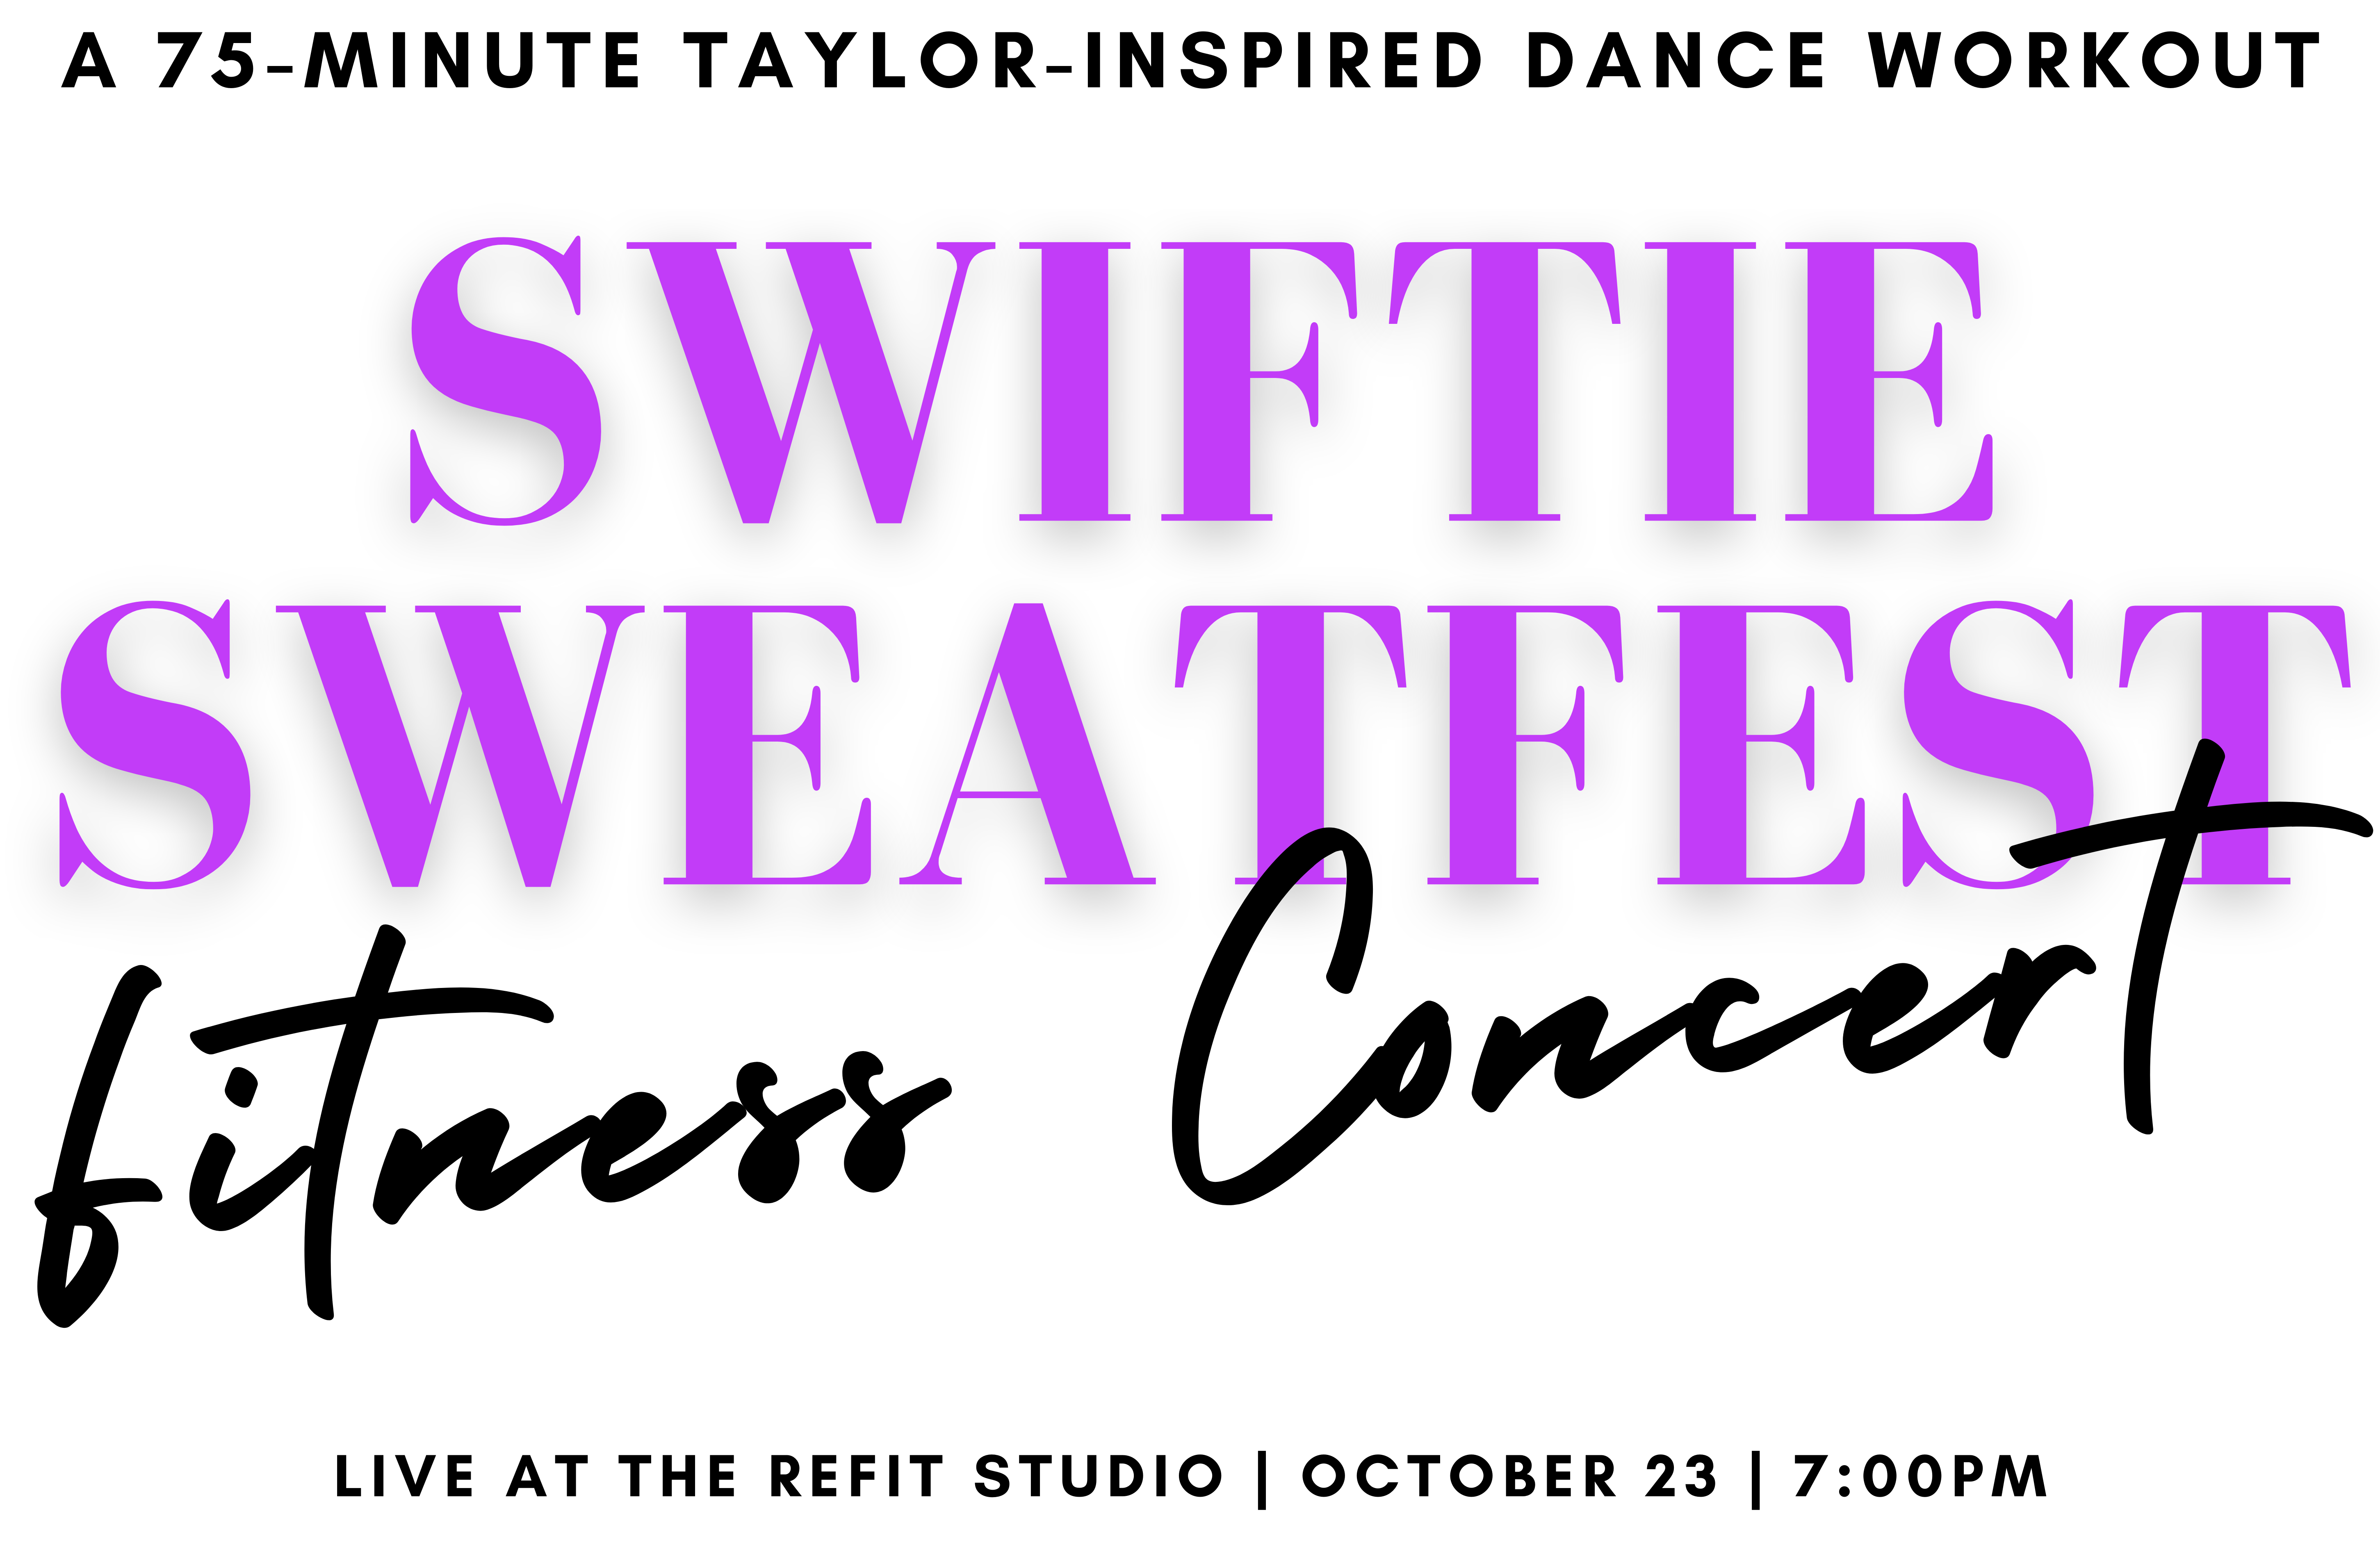 REFIT Waco Swiftie Sweatfest - REFIT